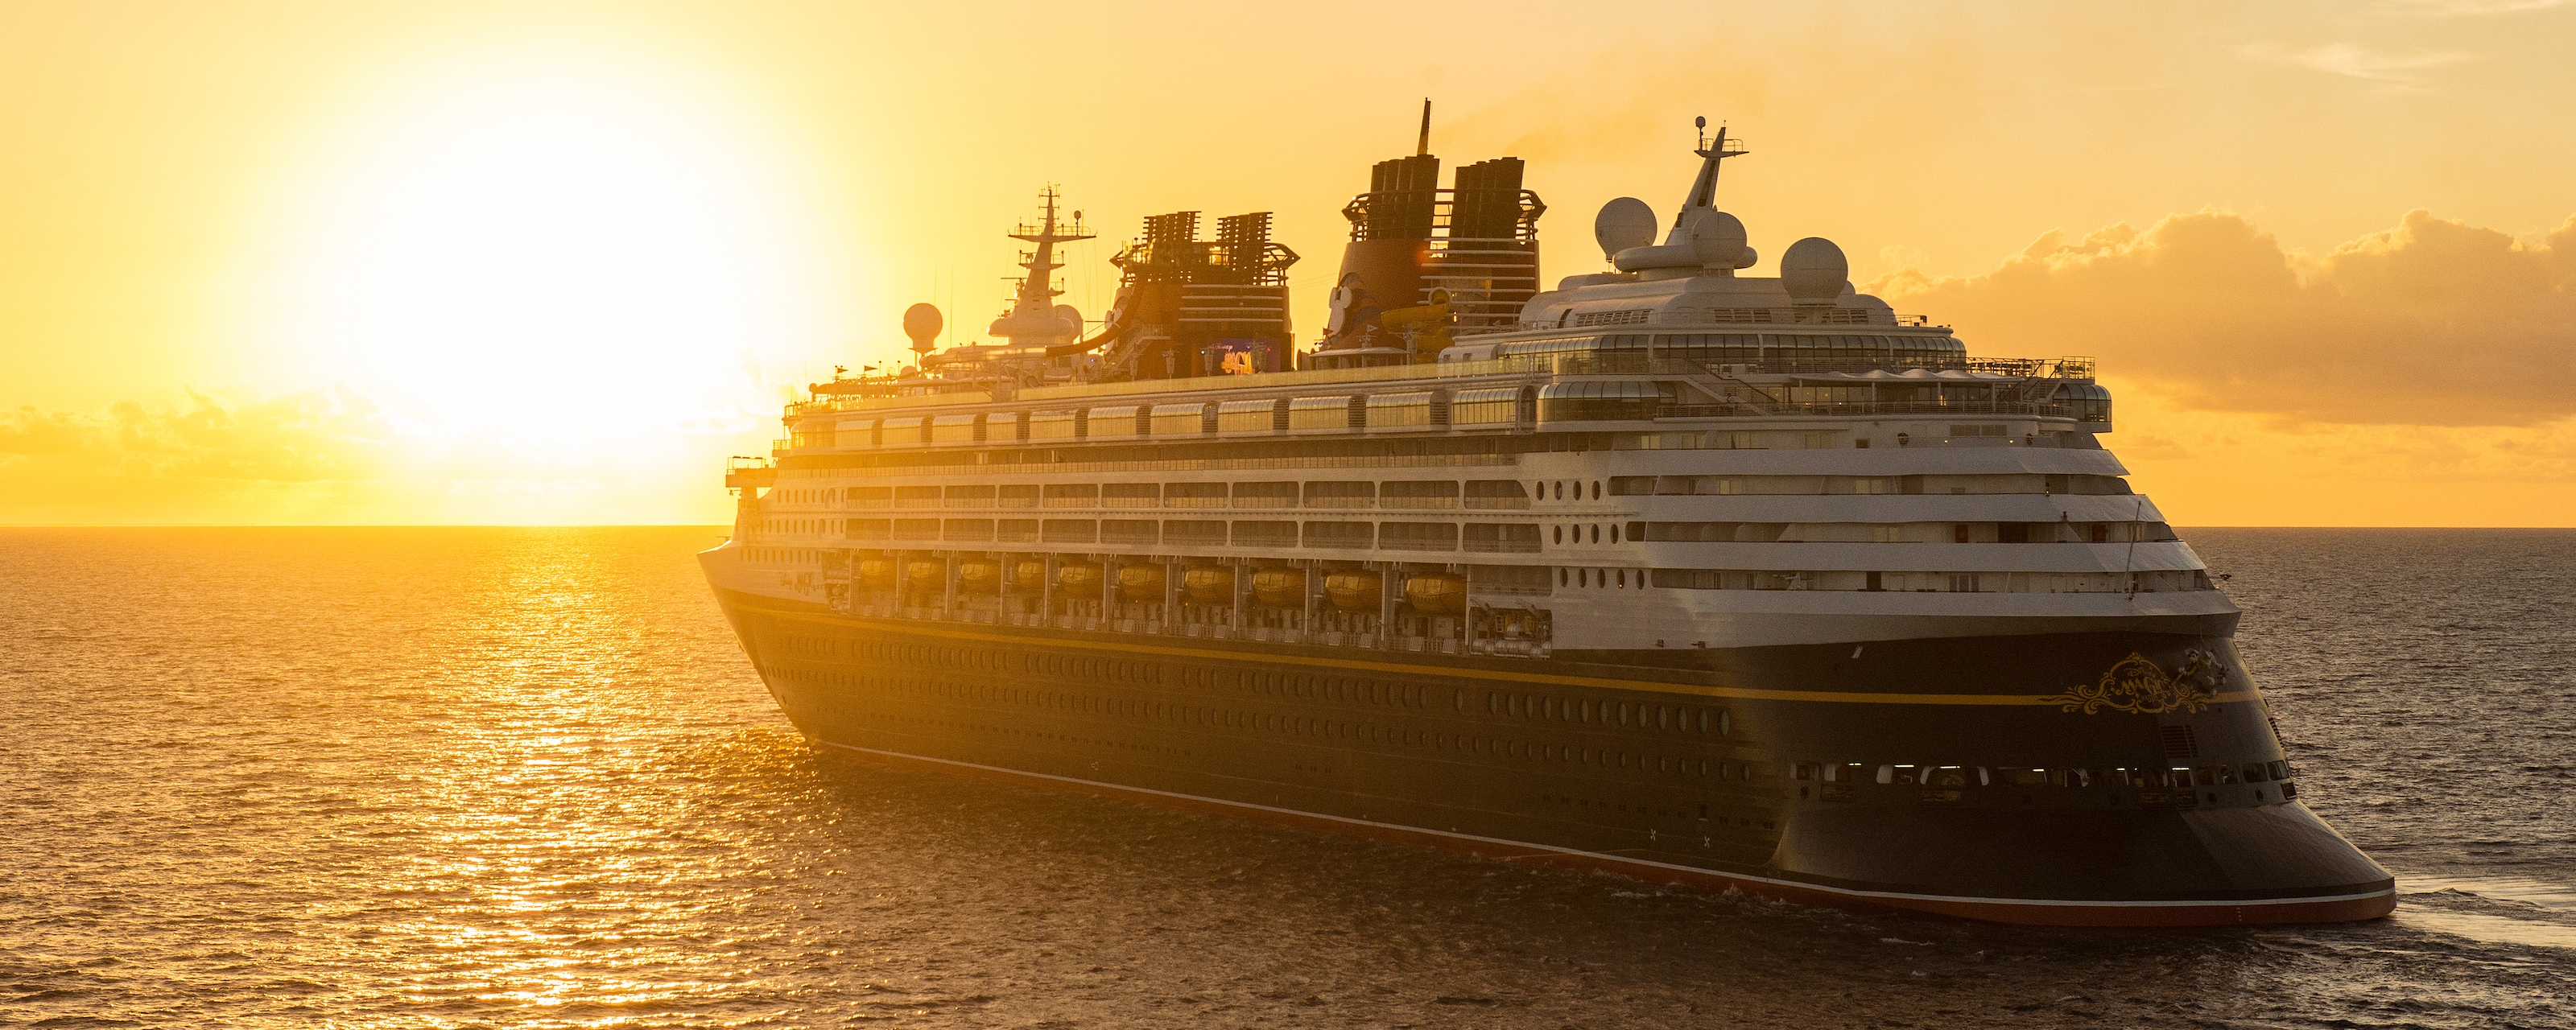 disney transatlantic cruise review